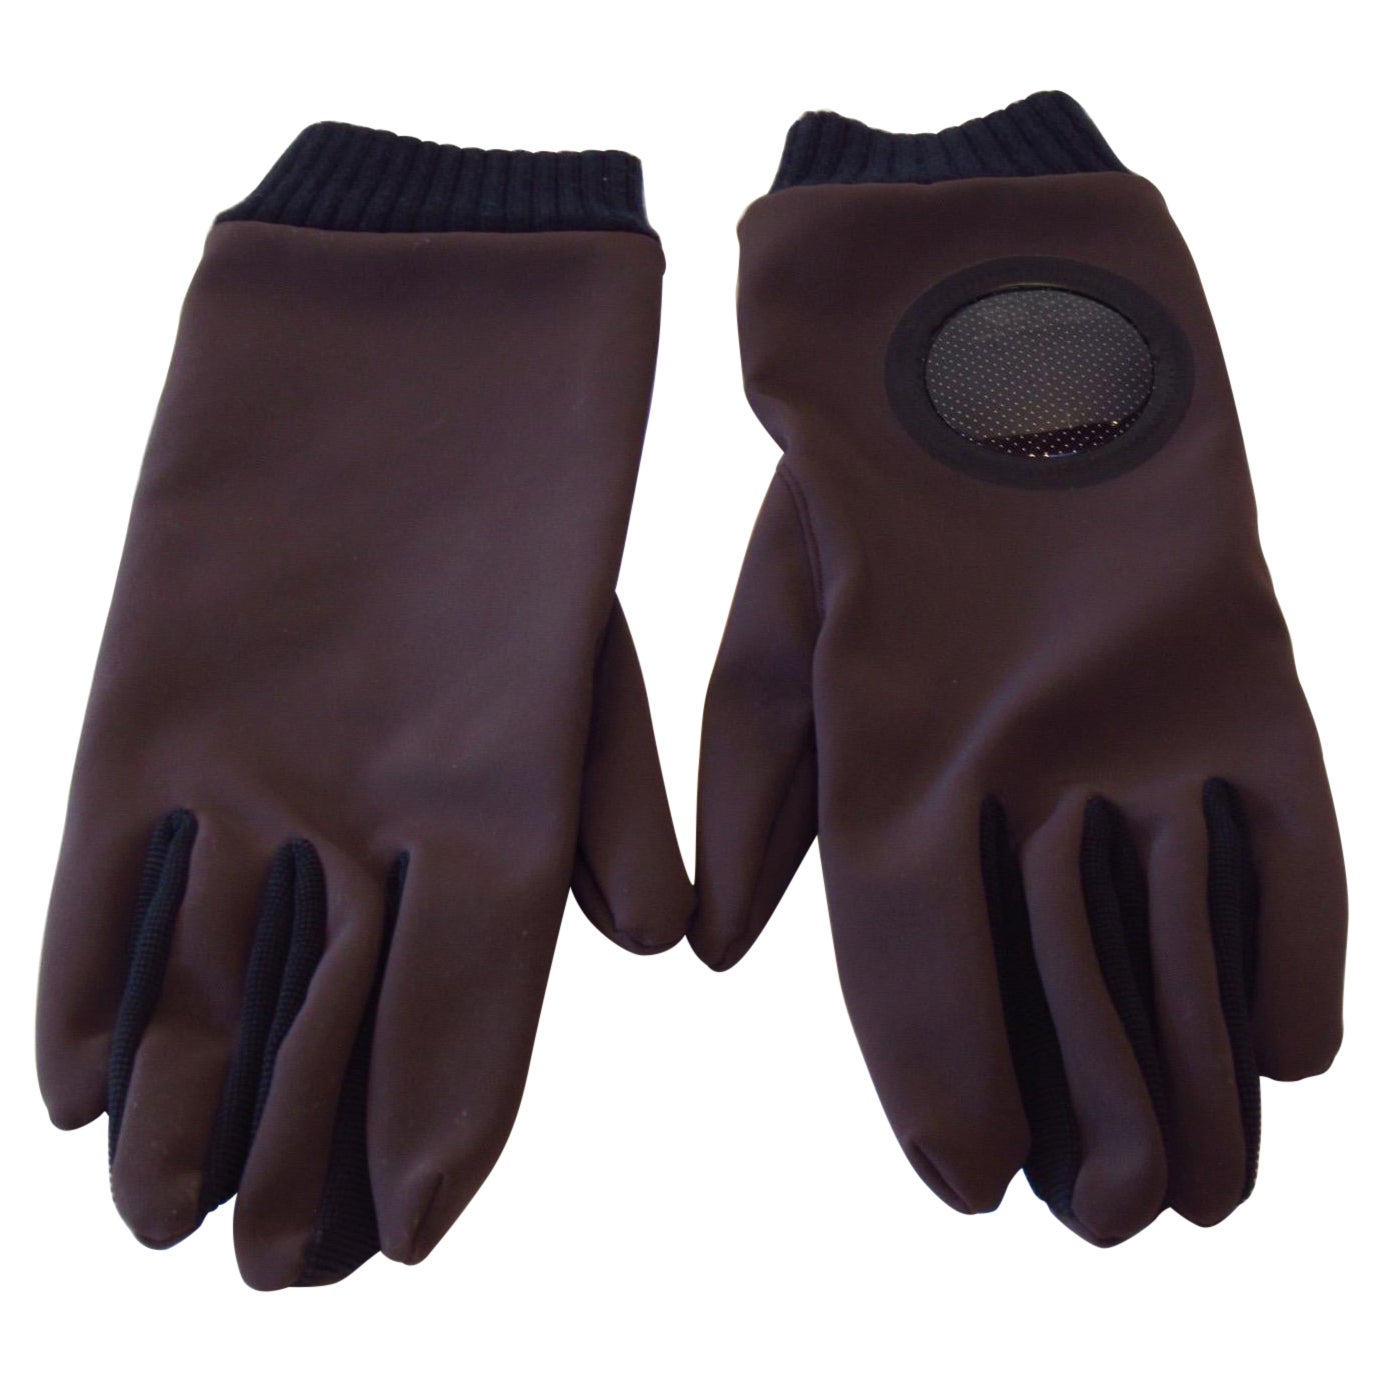 Undercover-Handschuhe aus Nylon   im Angebot